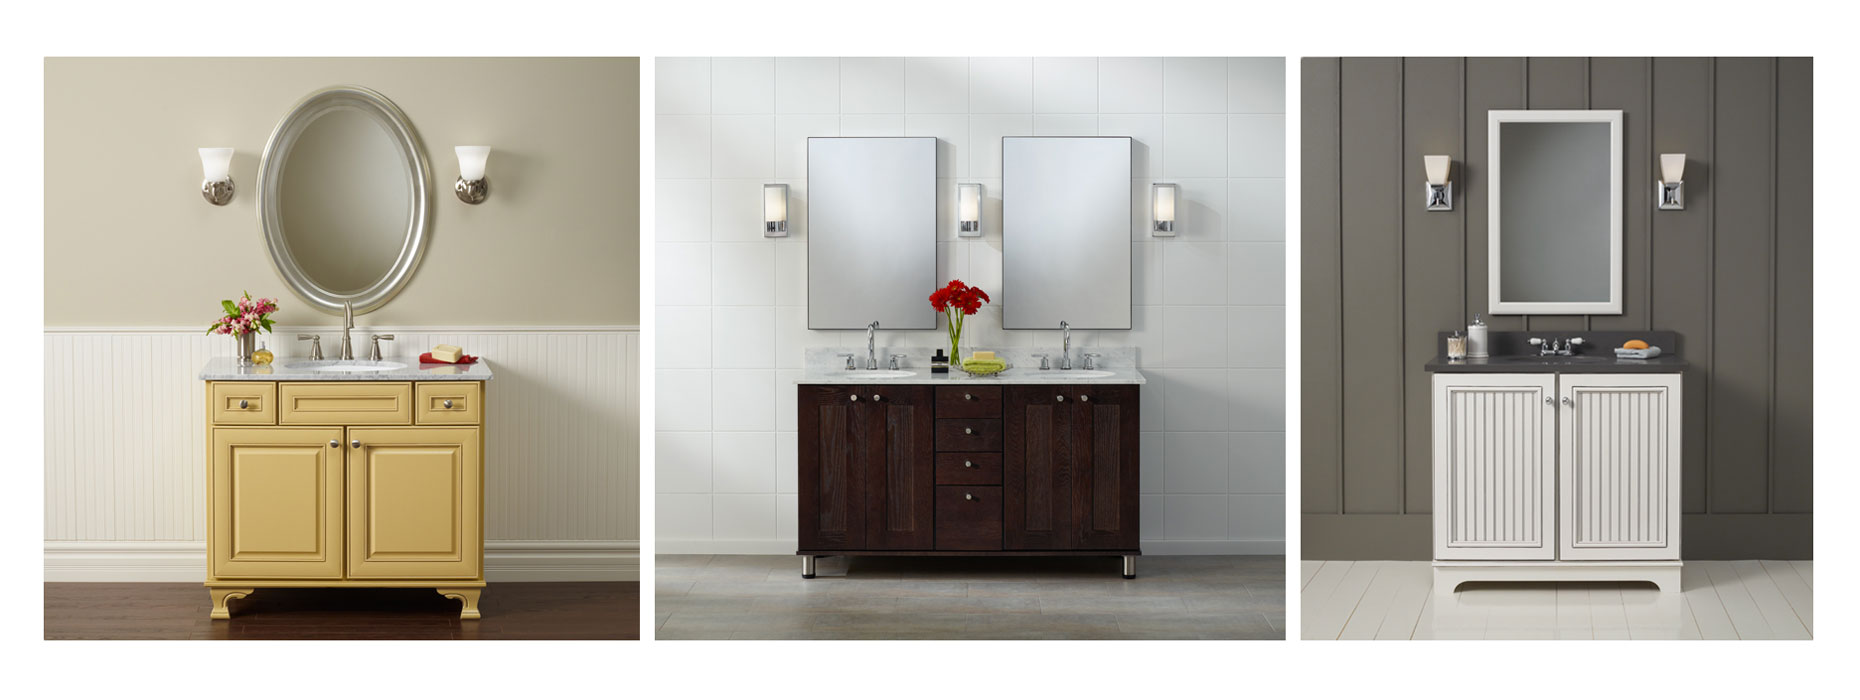 Norcraft/cabinets/bathroom/studio sets/product photo